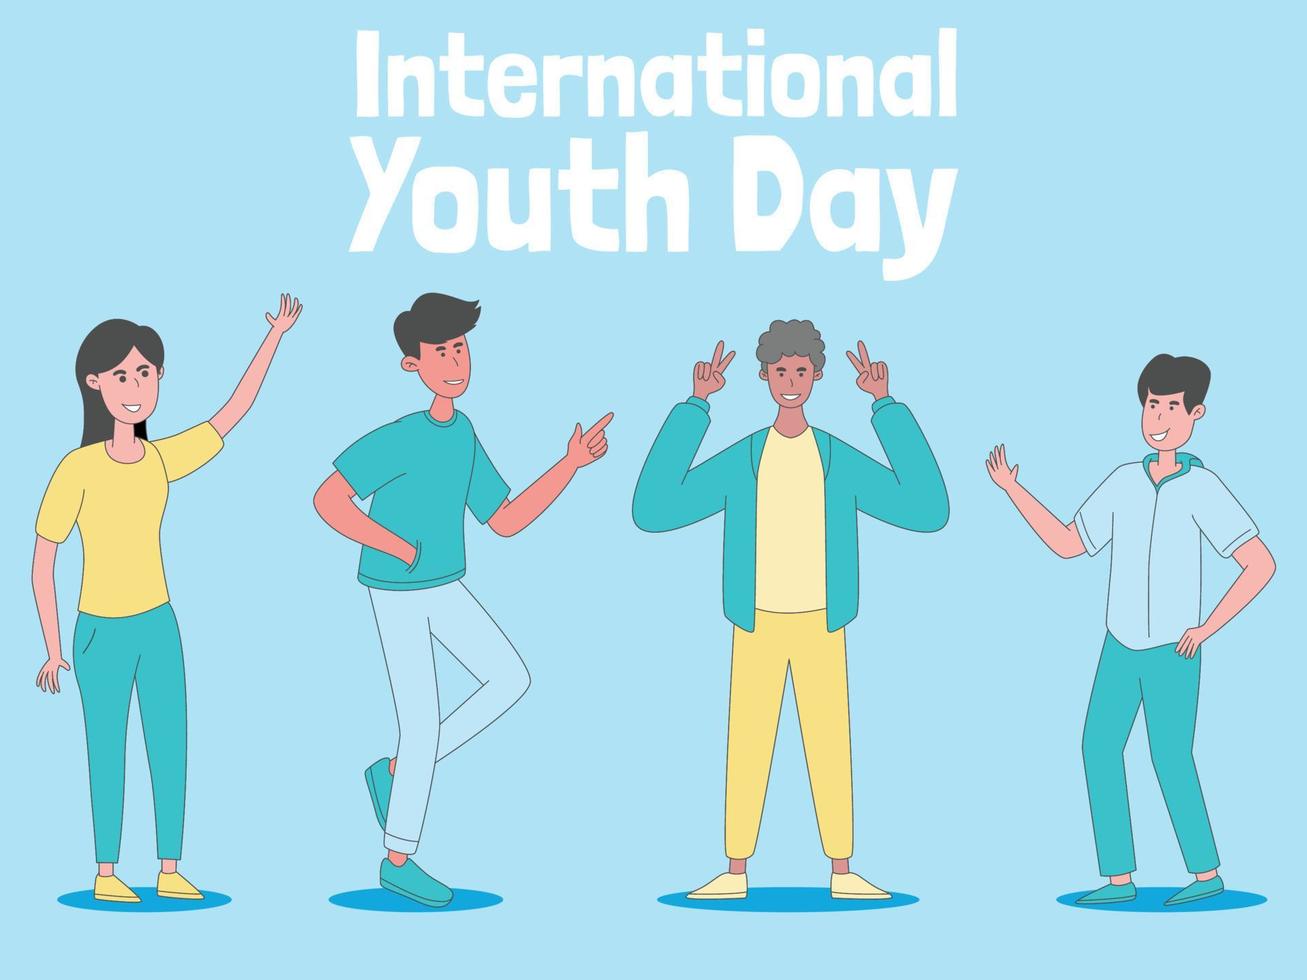 internationale jeugddag, gelukkige jeugdillustratie achtergrondbanner vector